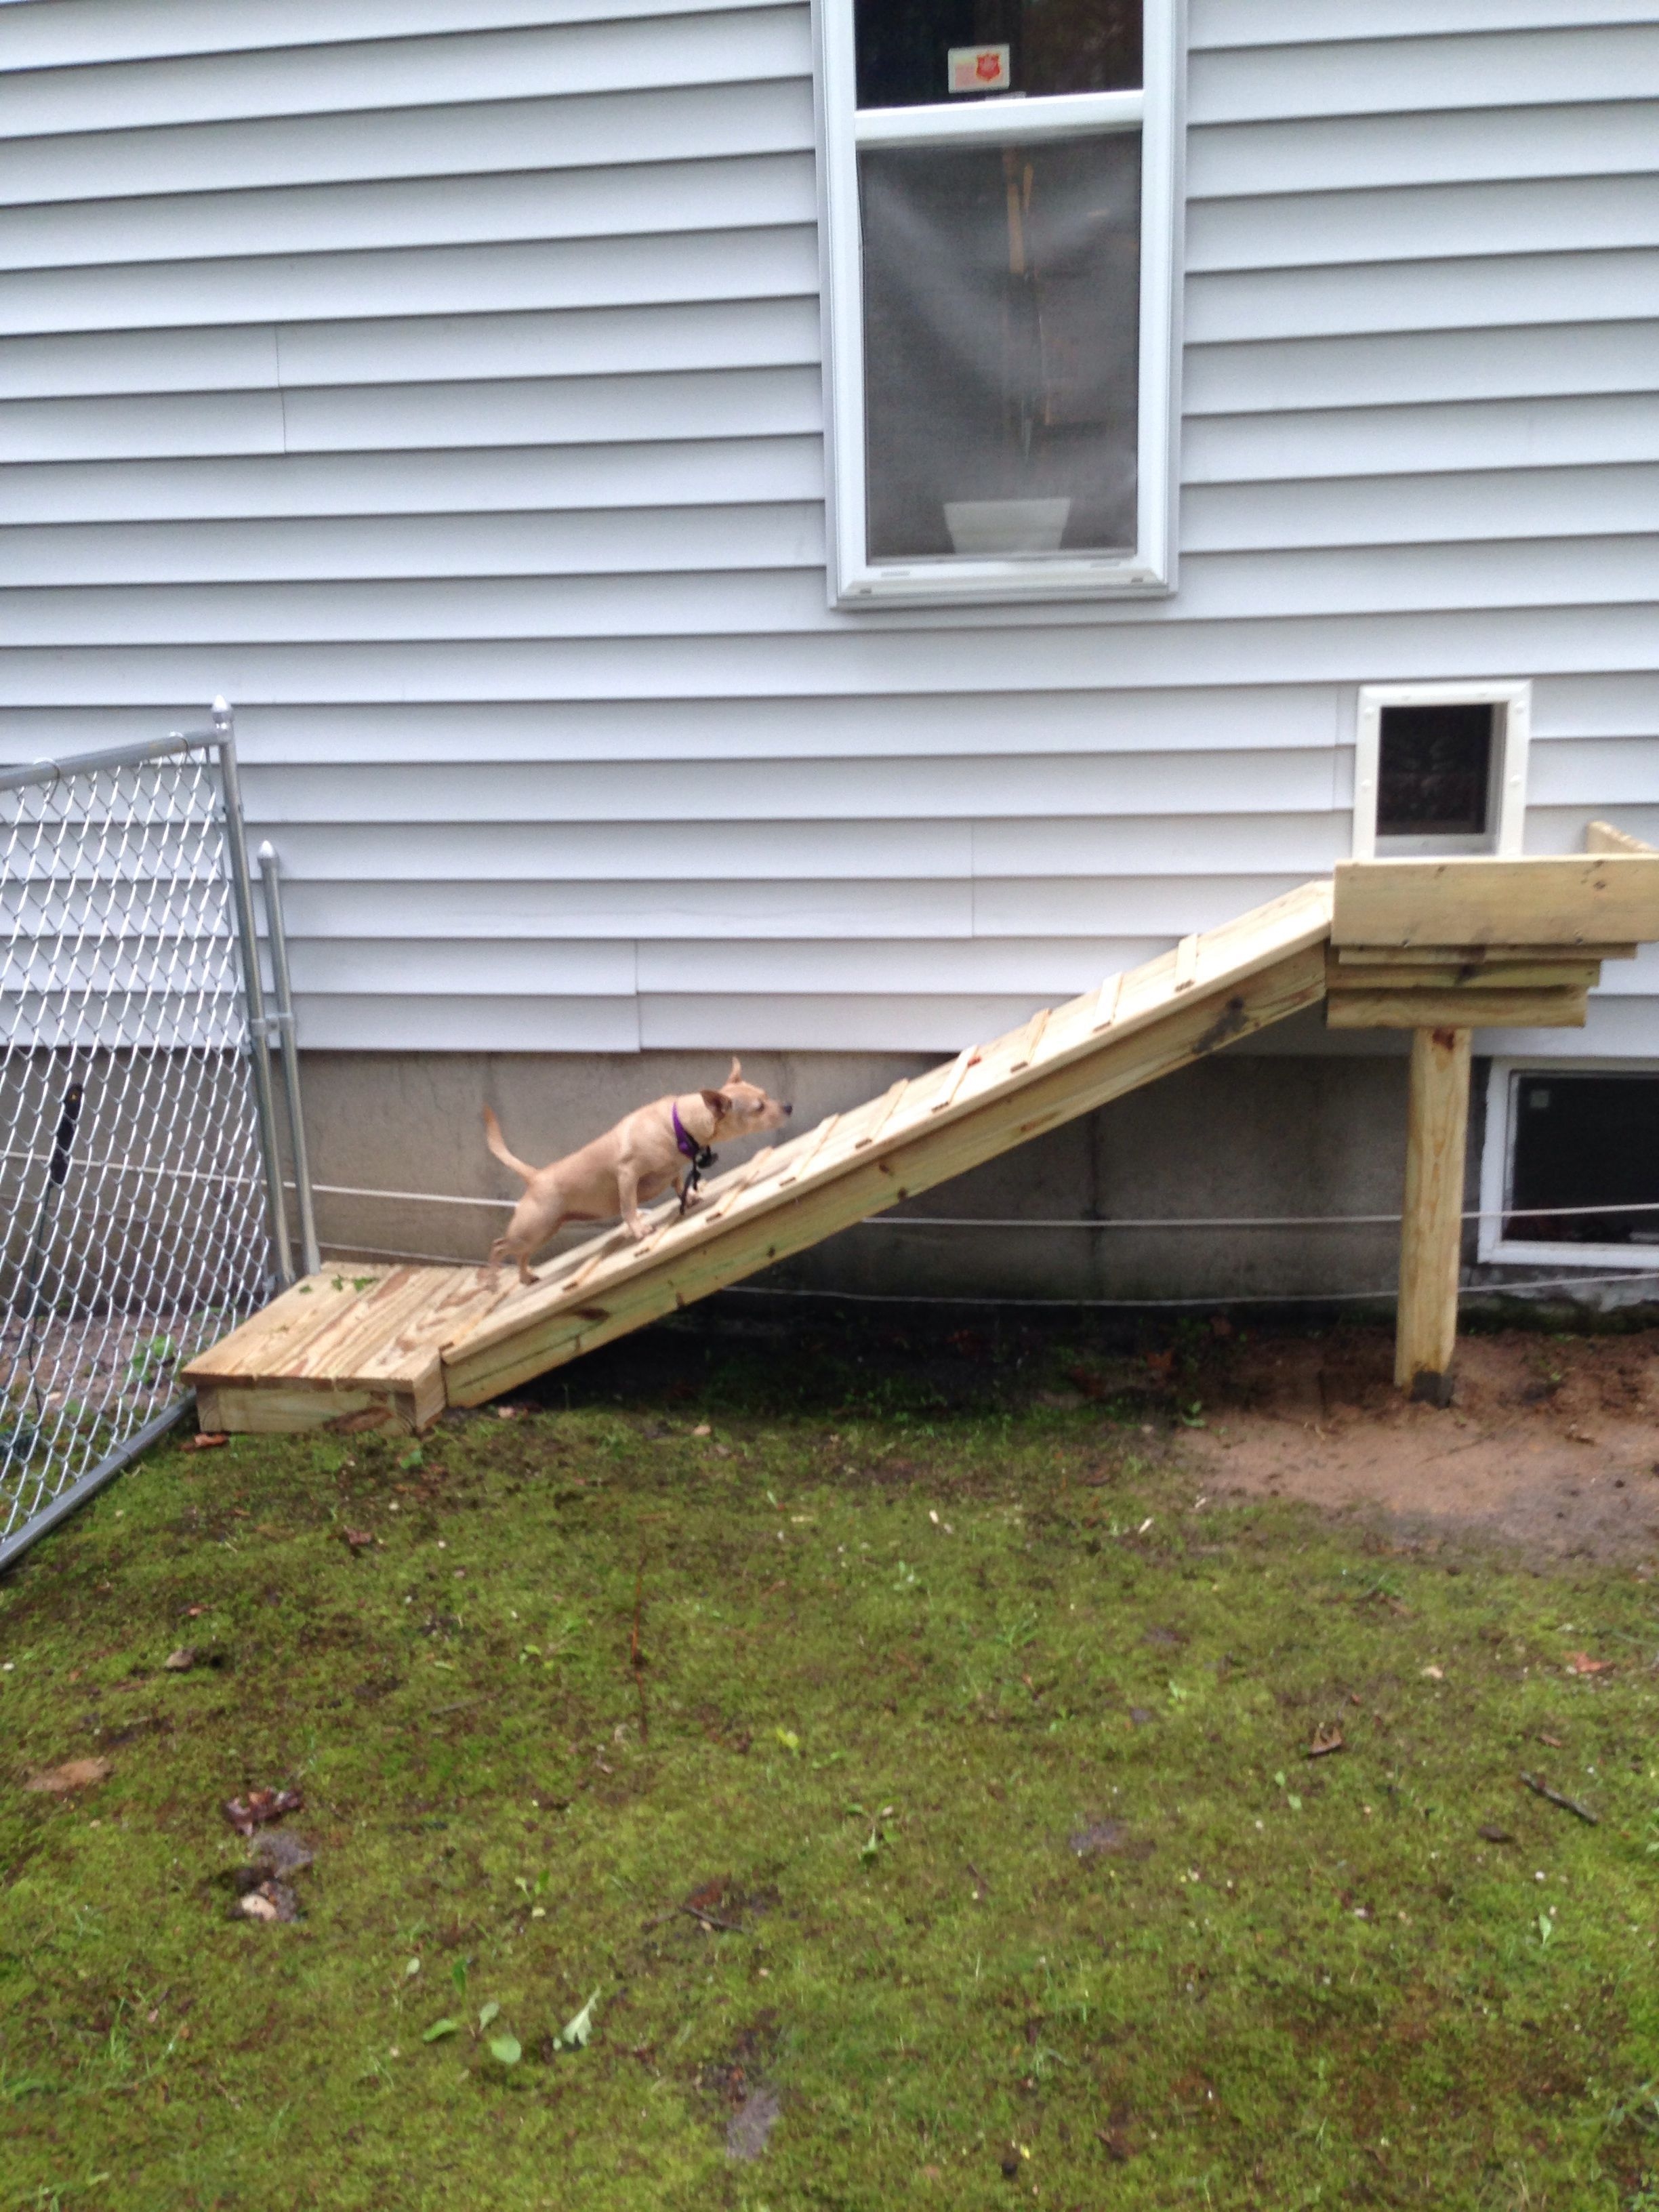 dog ramp for porch steps